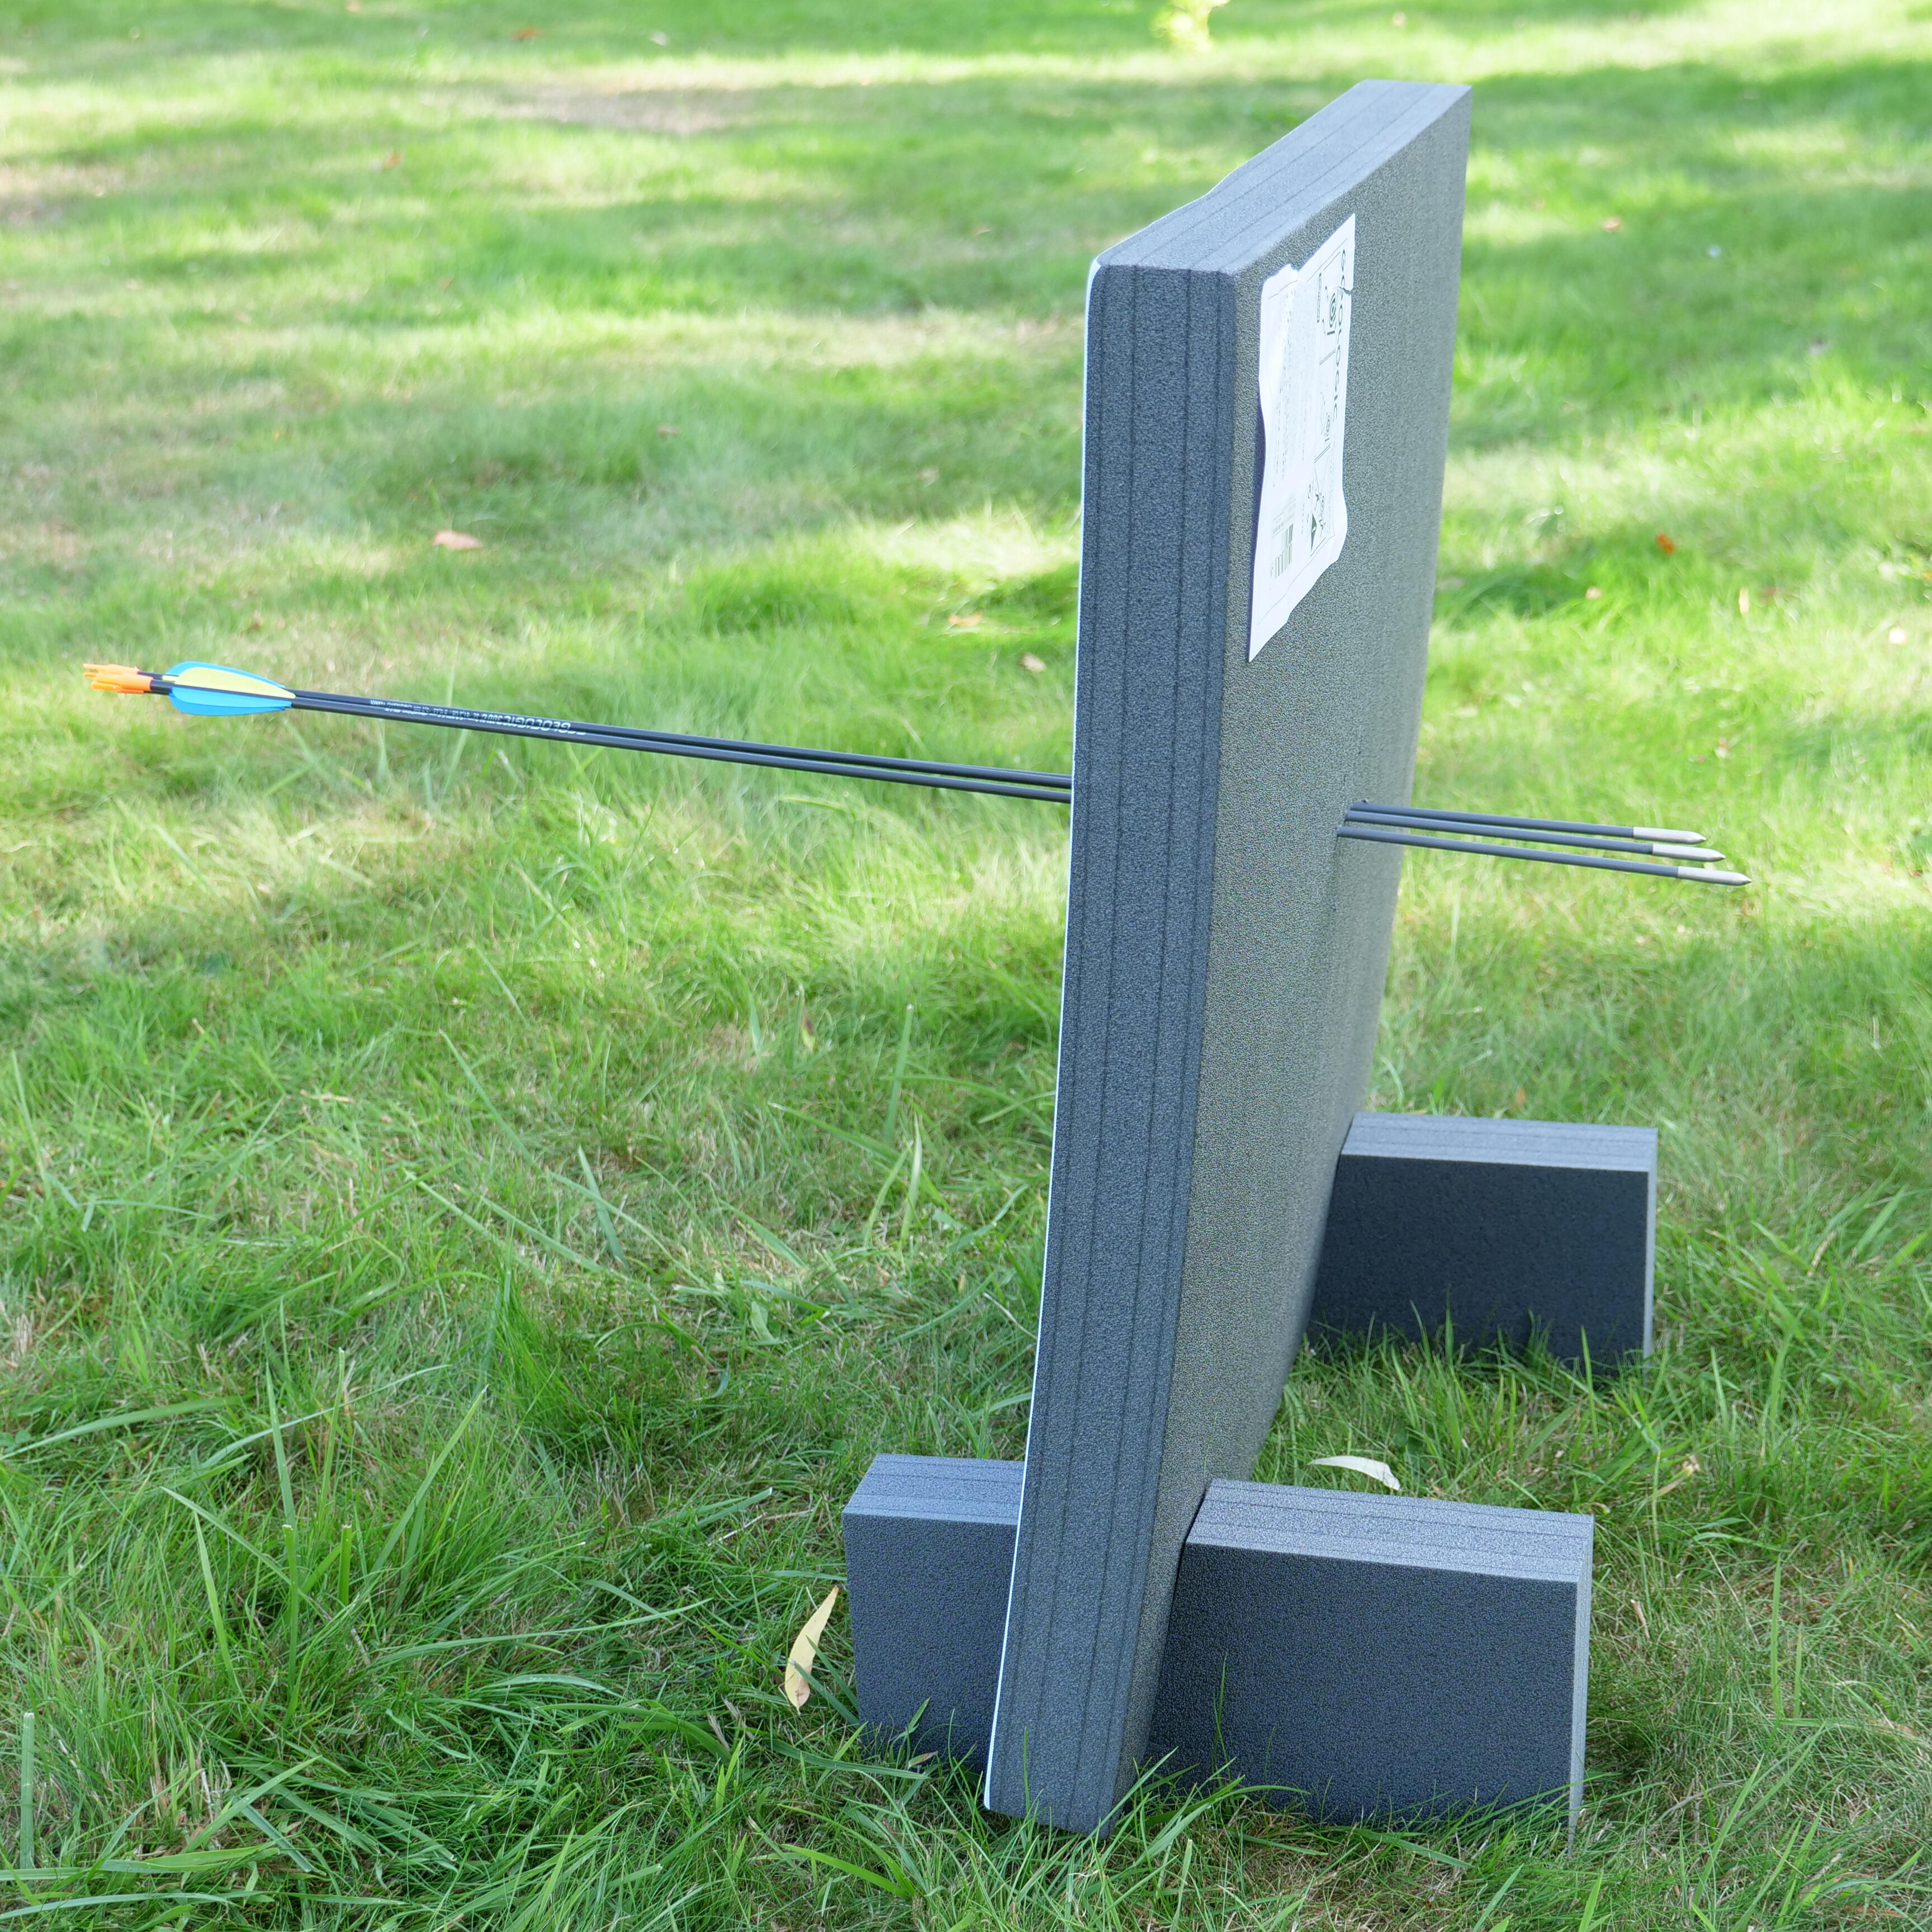 Steel Archery Target - Discovery 67x67 - GEOLOGIC